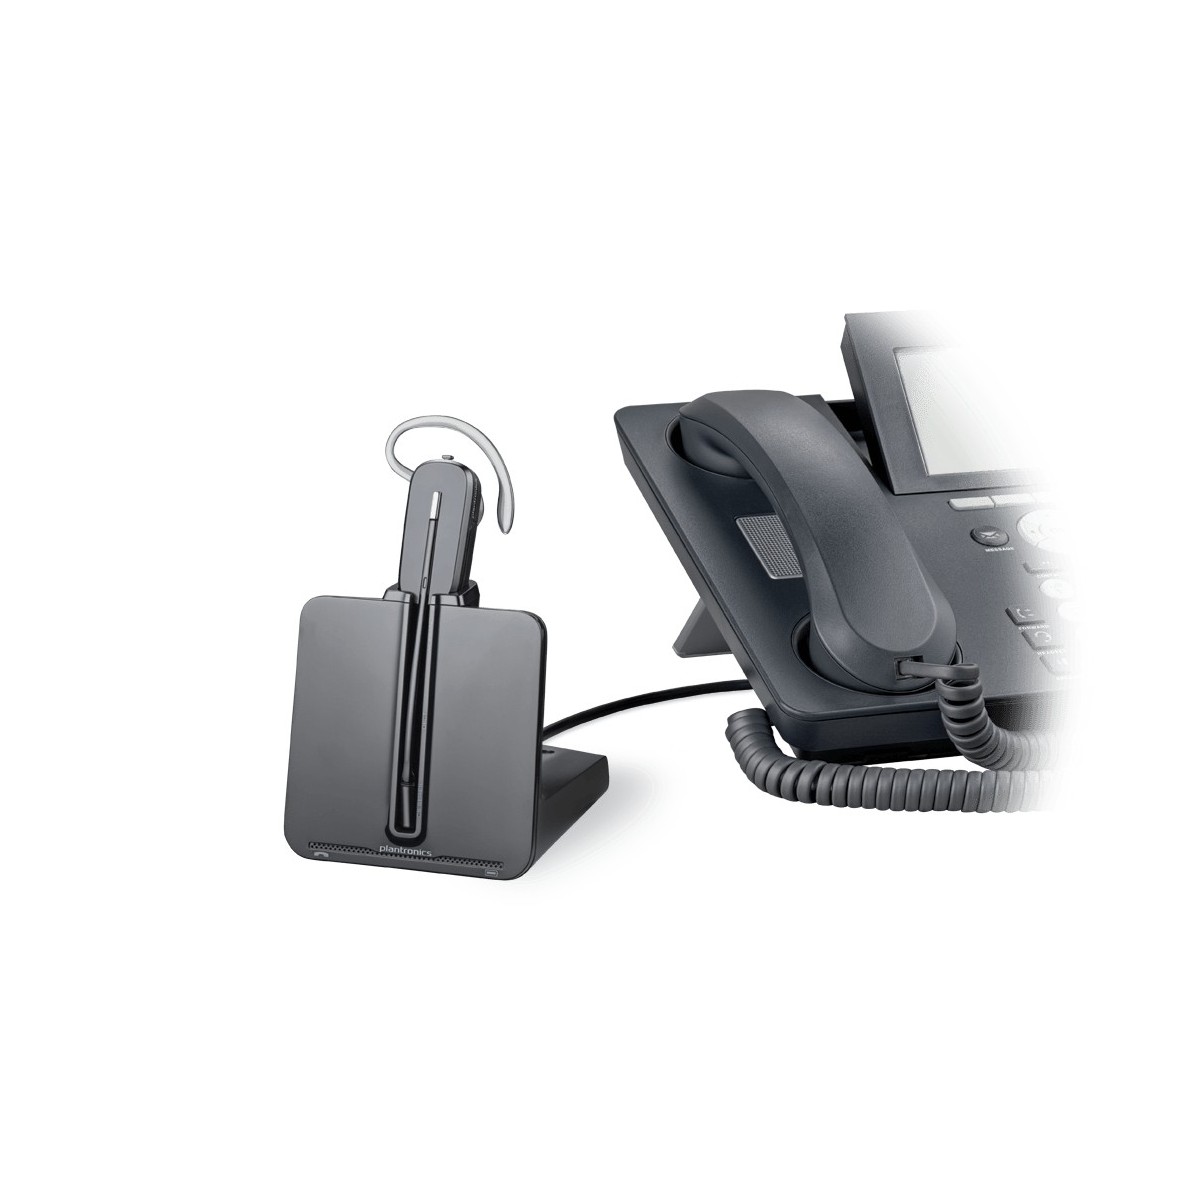 Poly CS540/A - Headset - Ear-hook - Office/Call center - Black - Monaural - Wireless